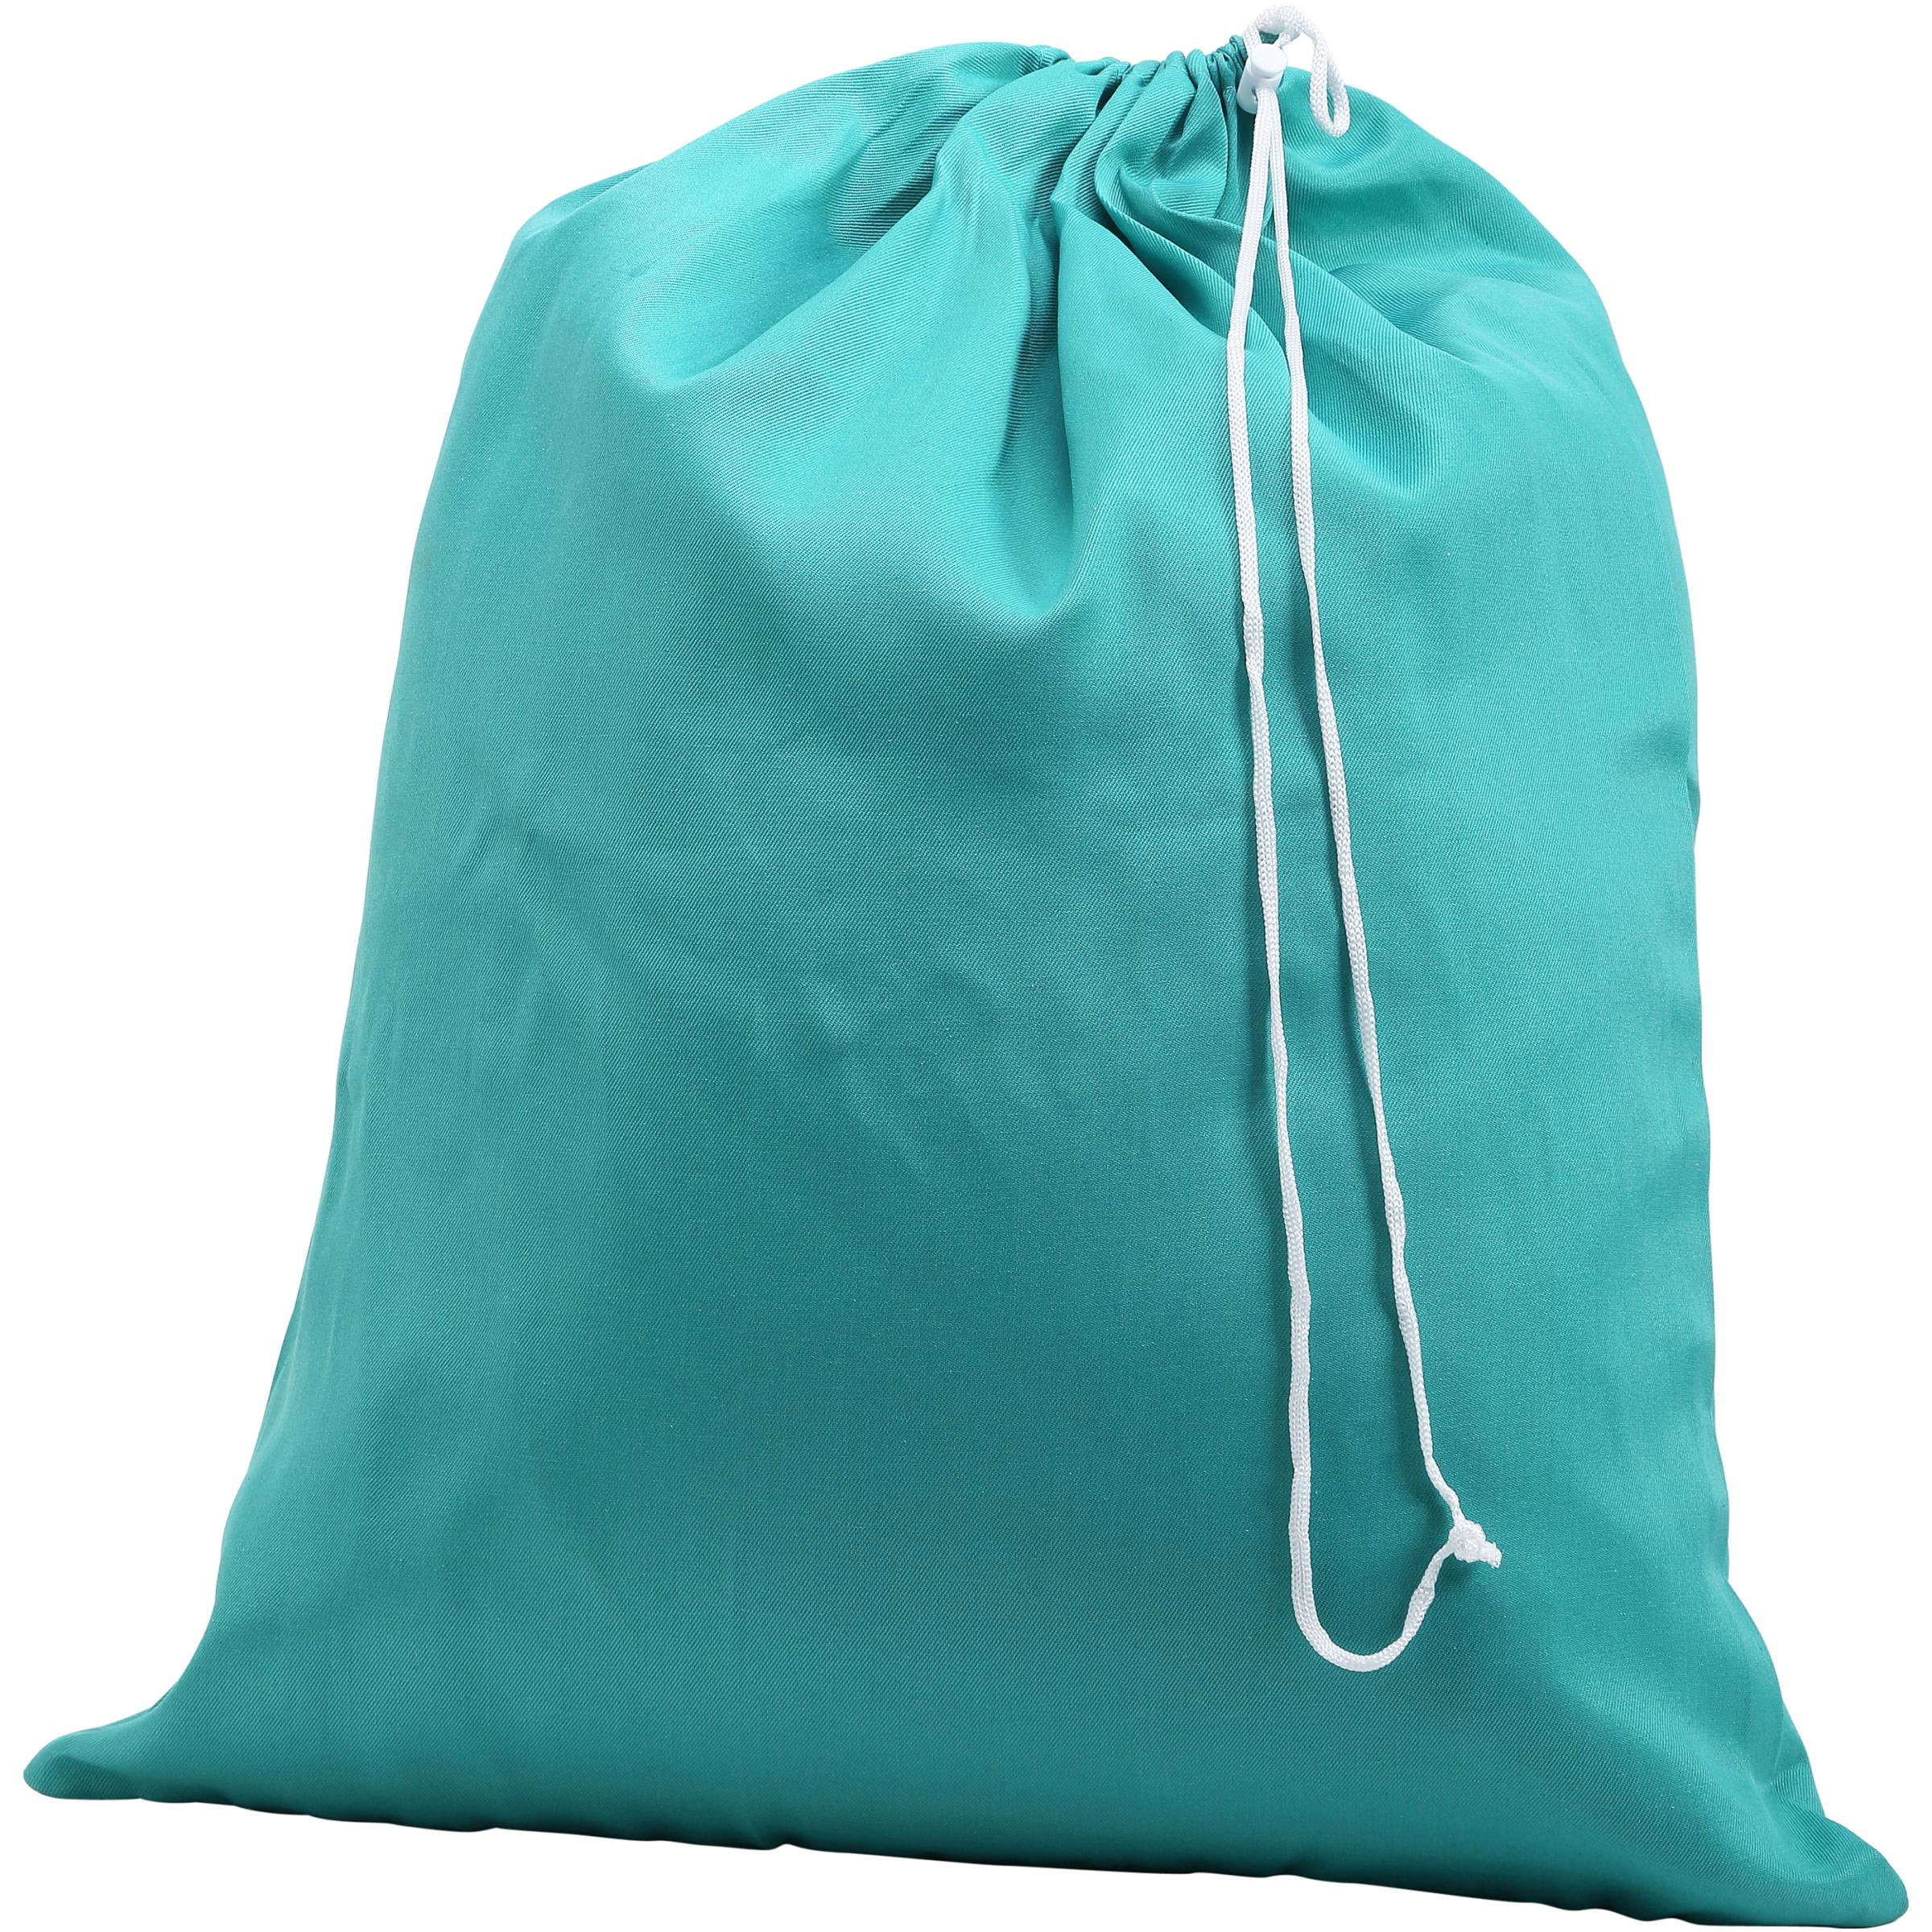 Mainstays Teal Splash Heavy-Duty Fabric Laundry Bag, 5 Count - Walmart.com